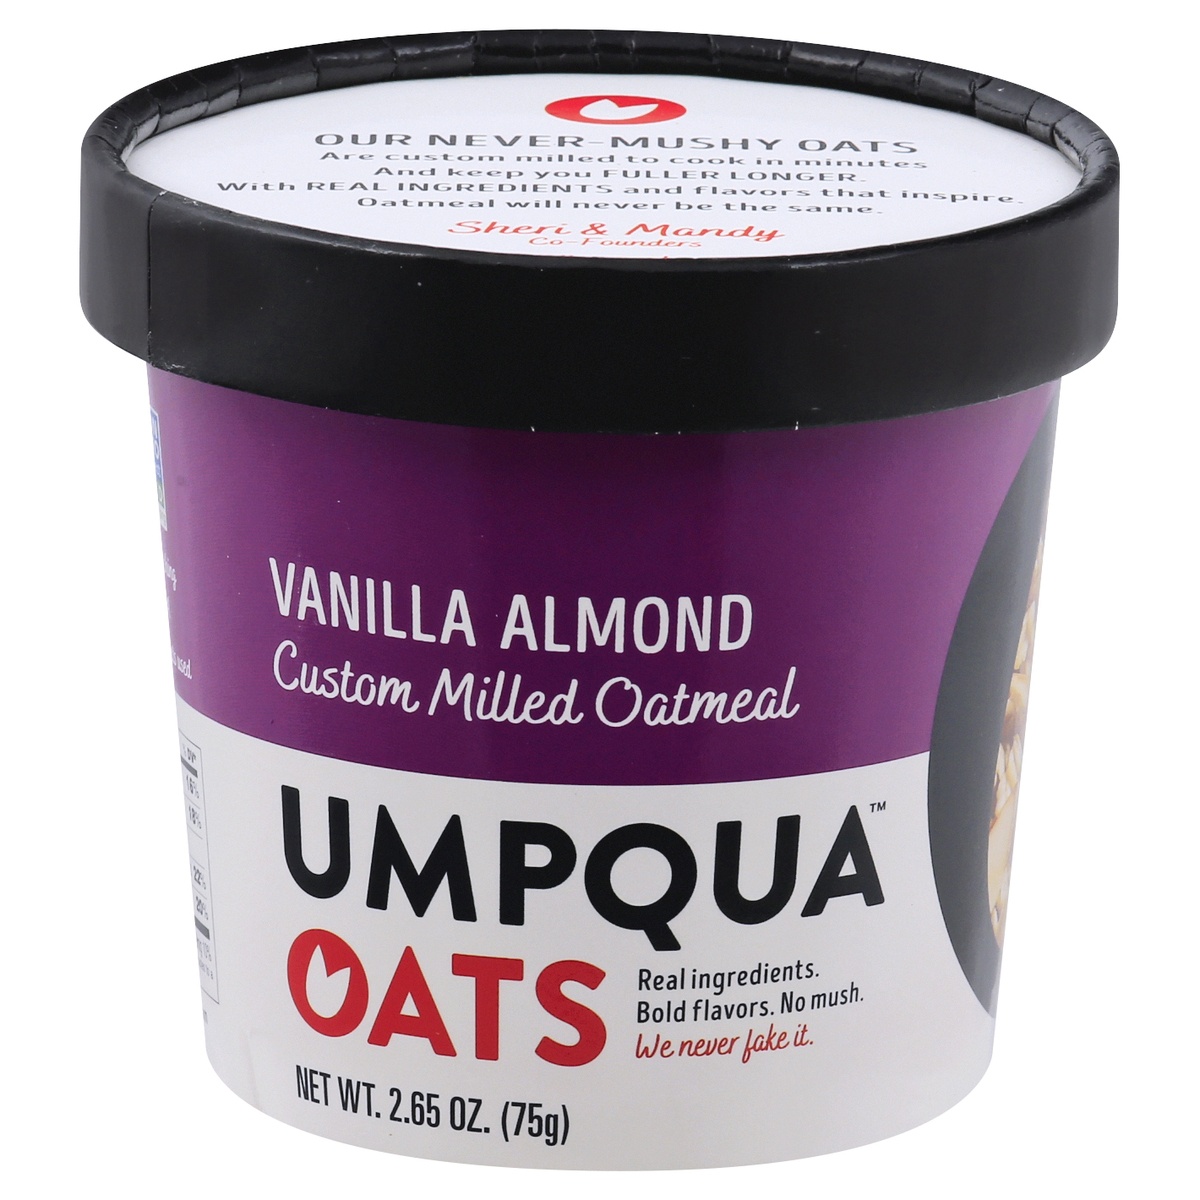 slide 1 of 1, Umpqua Oats Vanilla Almond Crunch, 2.65 oz